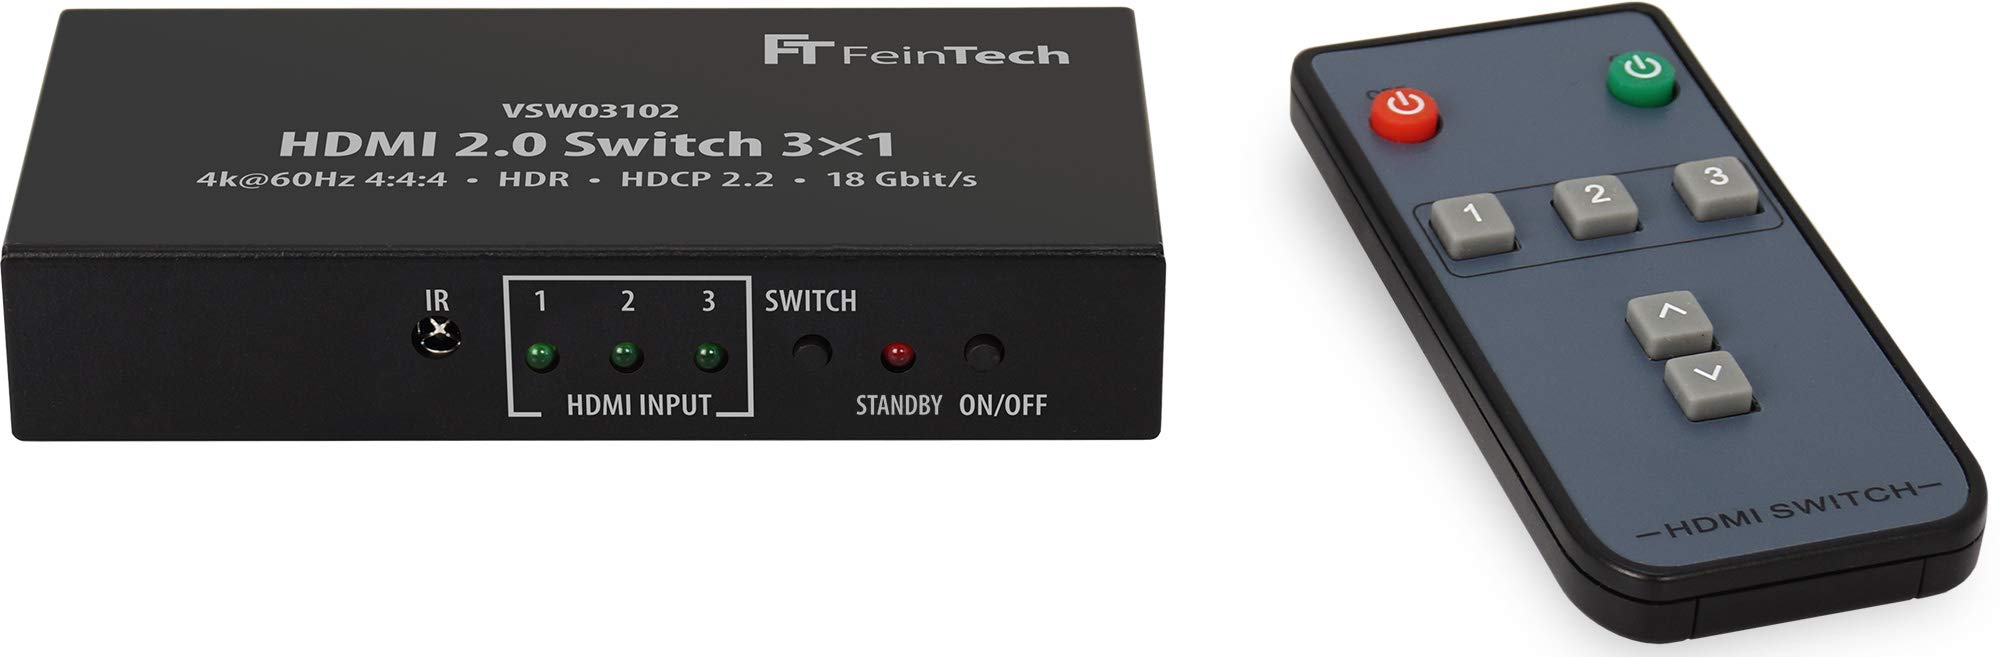 FeinTech VSW03102 HDMI Switch 3x1 Automatische Umschaltung 4K 60Hz HDR CEC Ultra-HD